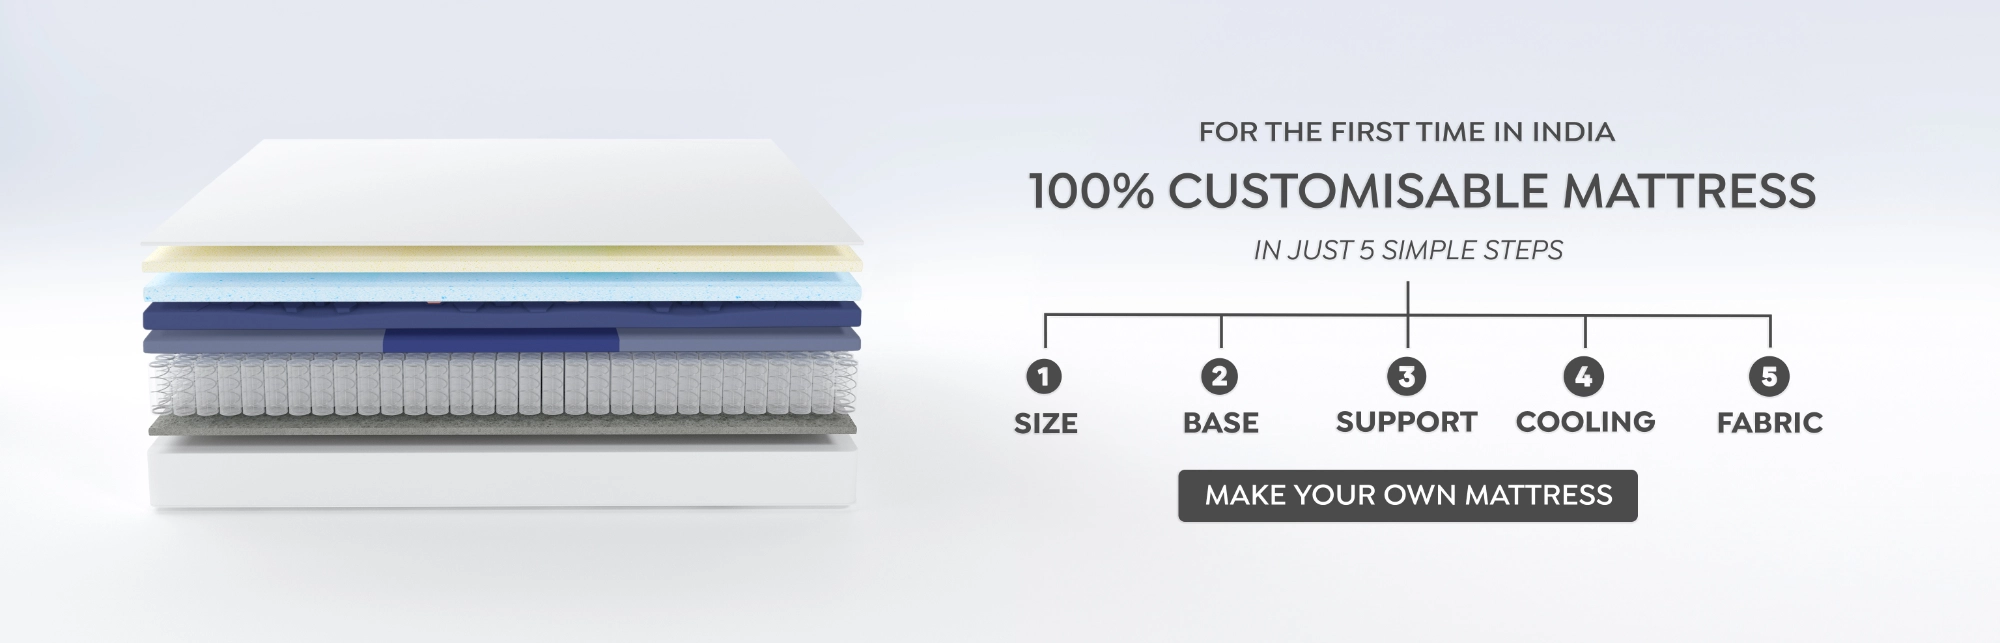 Make your own mattress